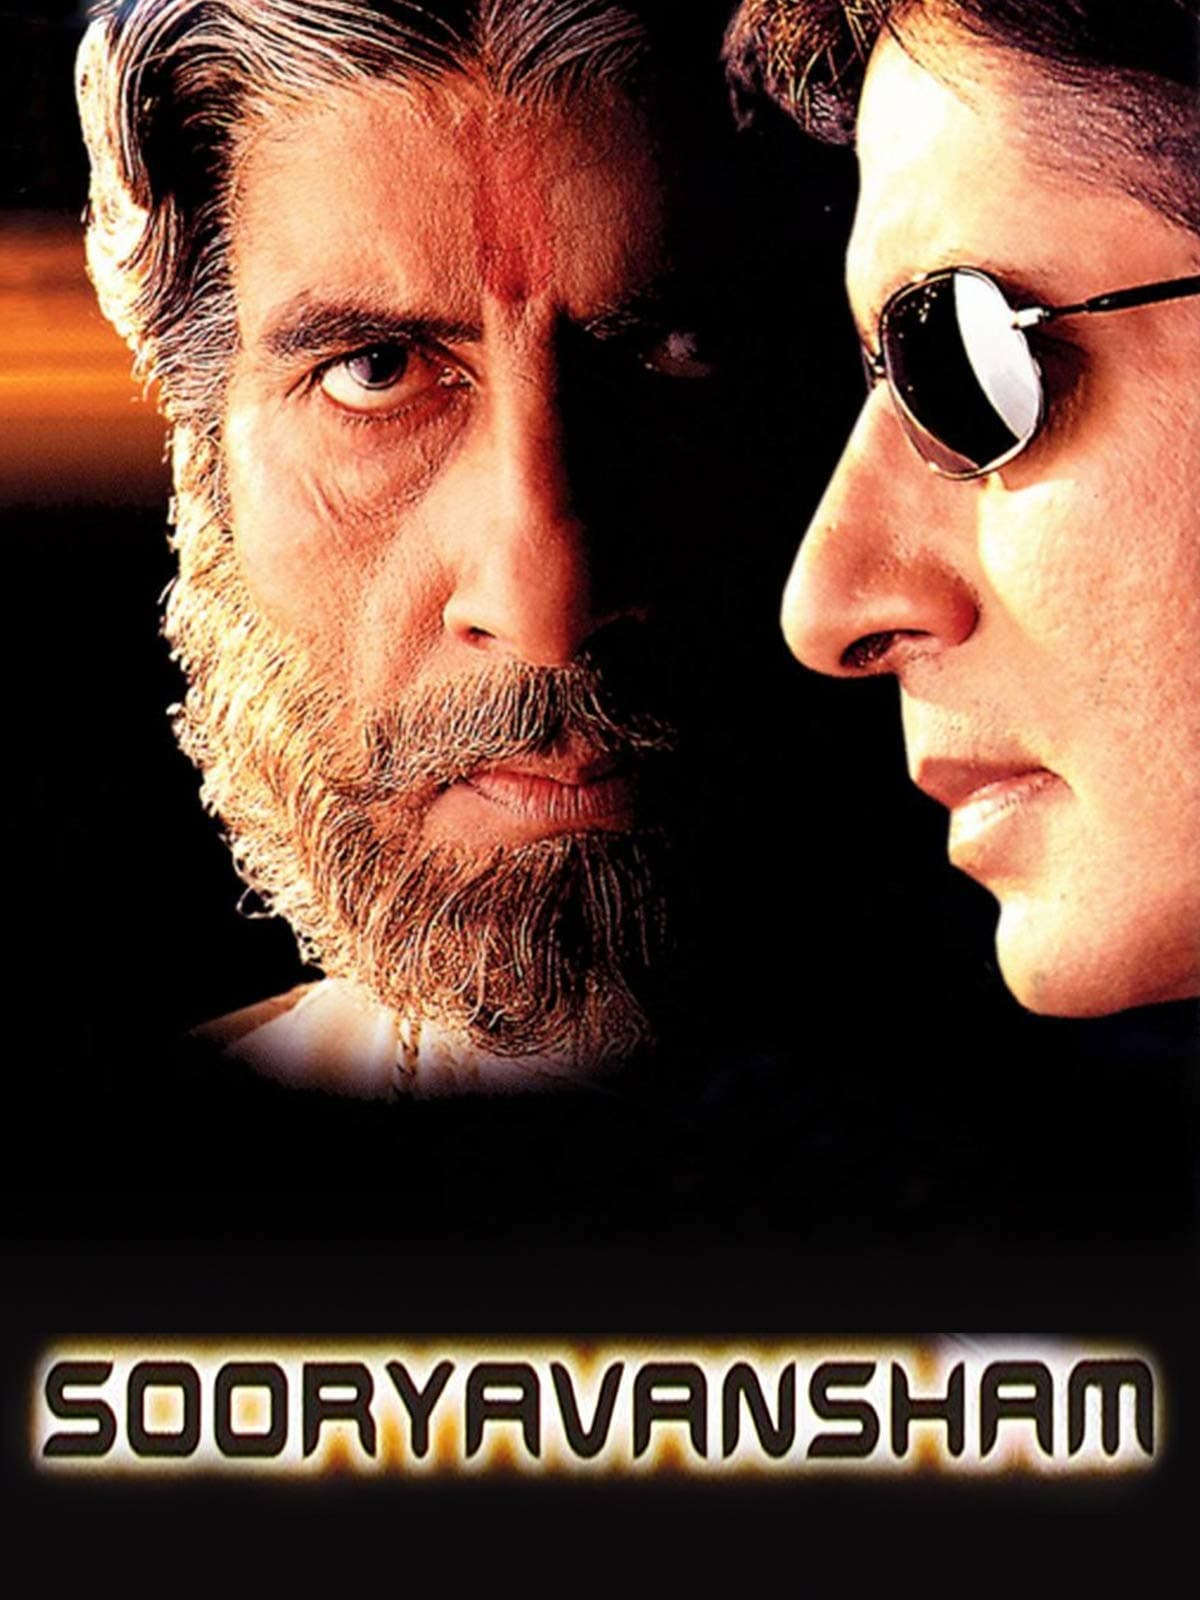 Poster for the movie "Sooryavansham"